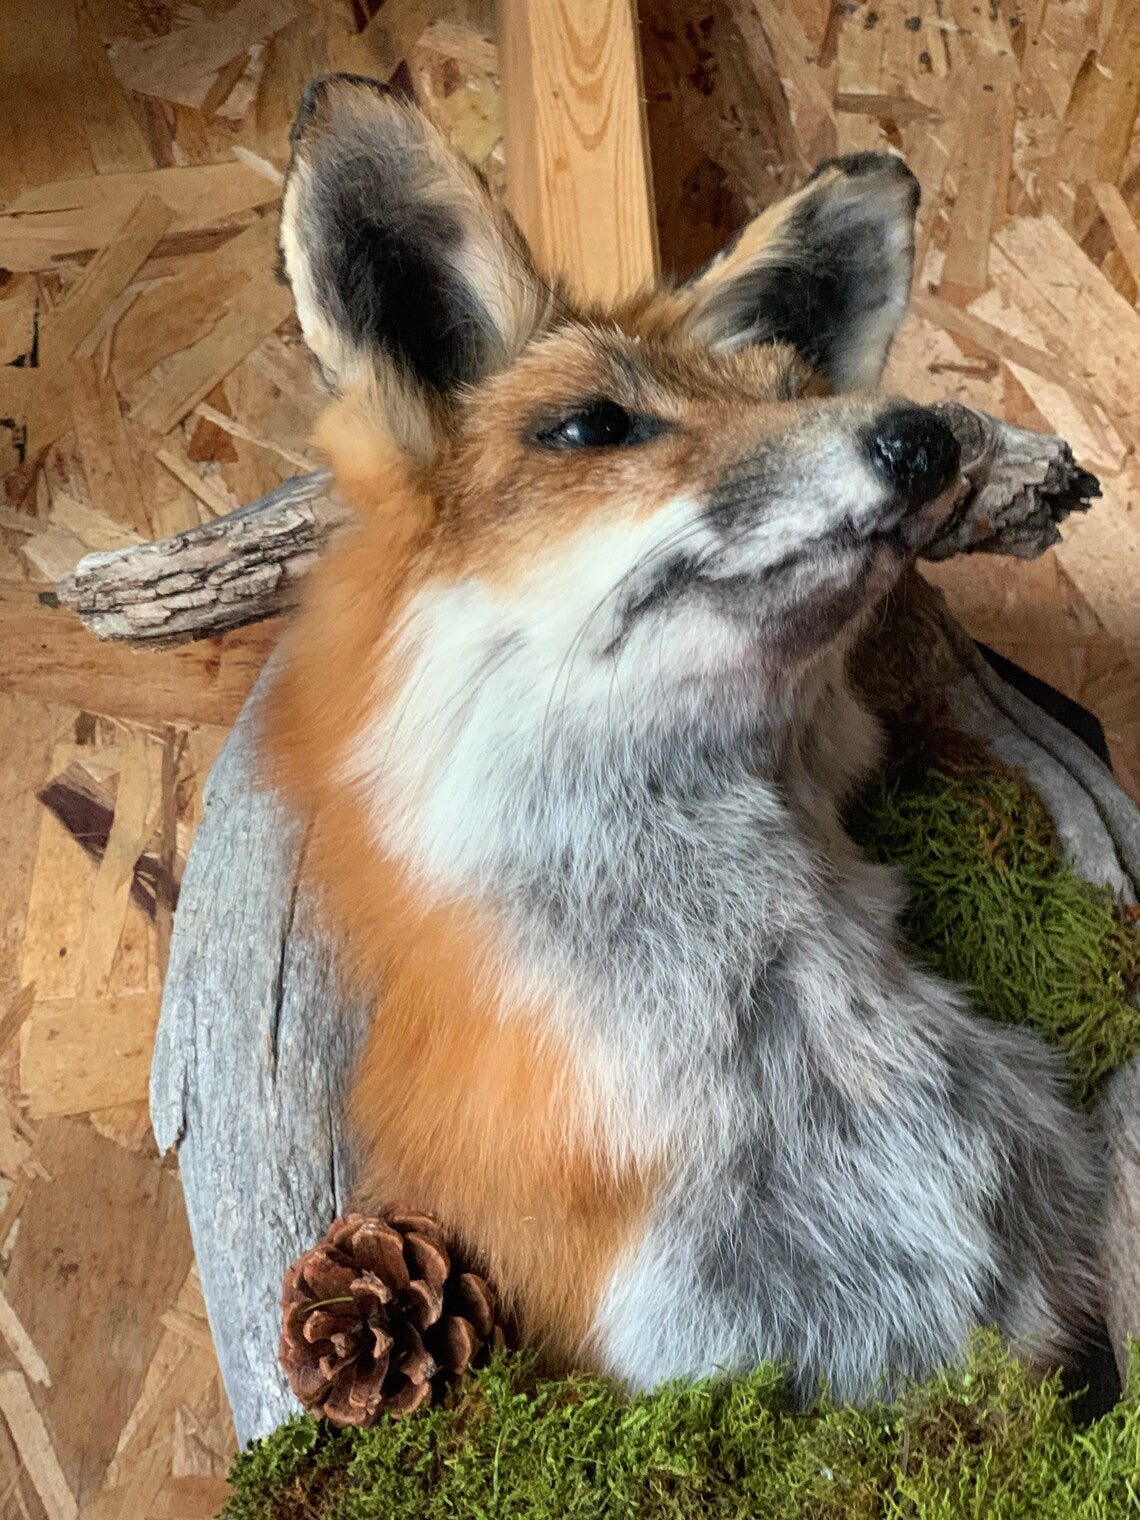 Red fox shoulder mount taxidermy in den